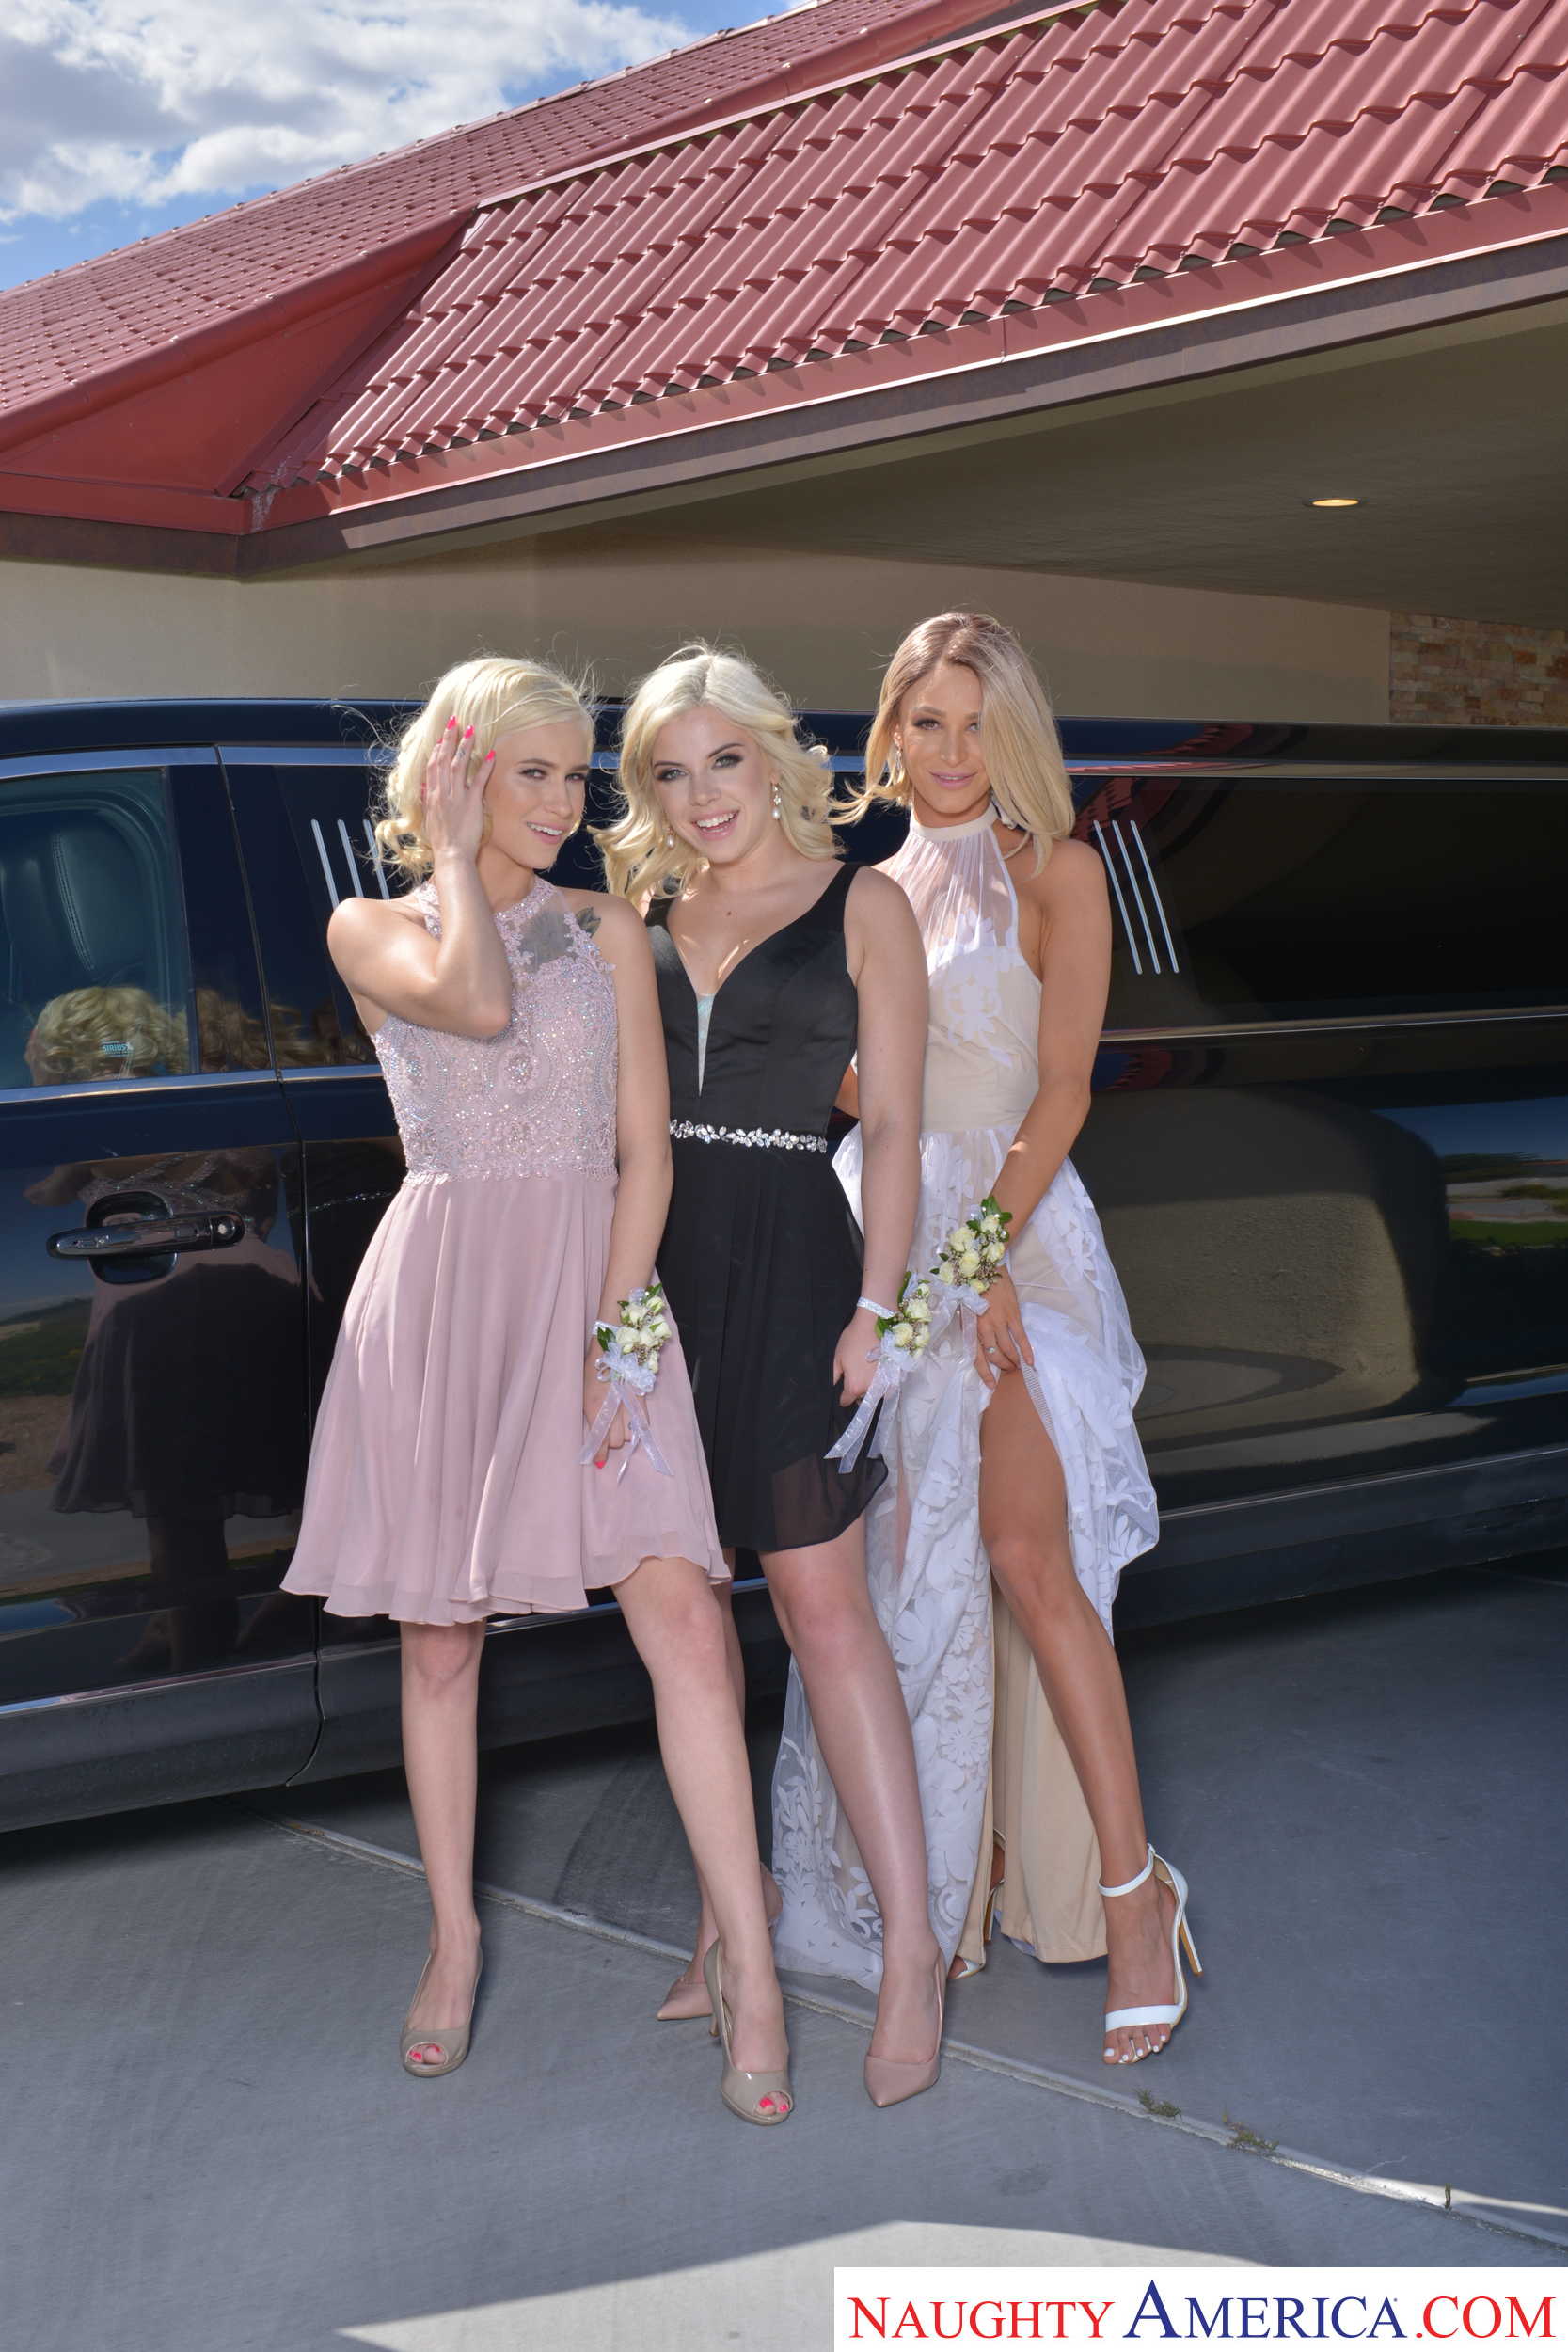 VR Naughty America 'Allie Nicole, Emma Hix, and Kiara Cole fuck date before Prom' starring Allie Nicole (Photo 66)